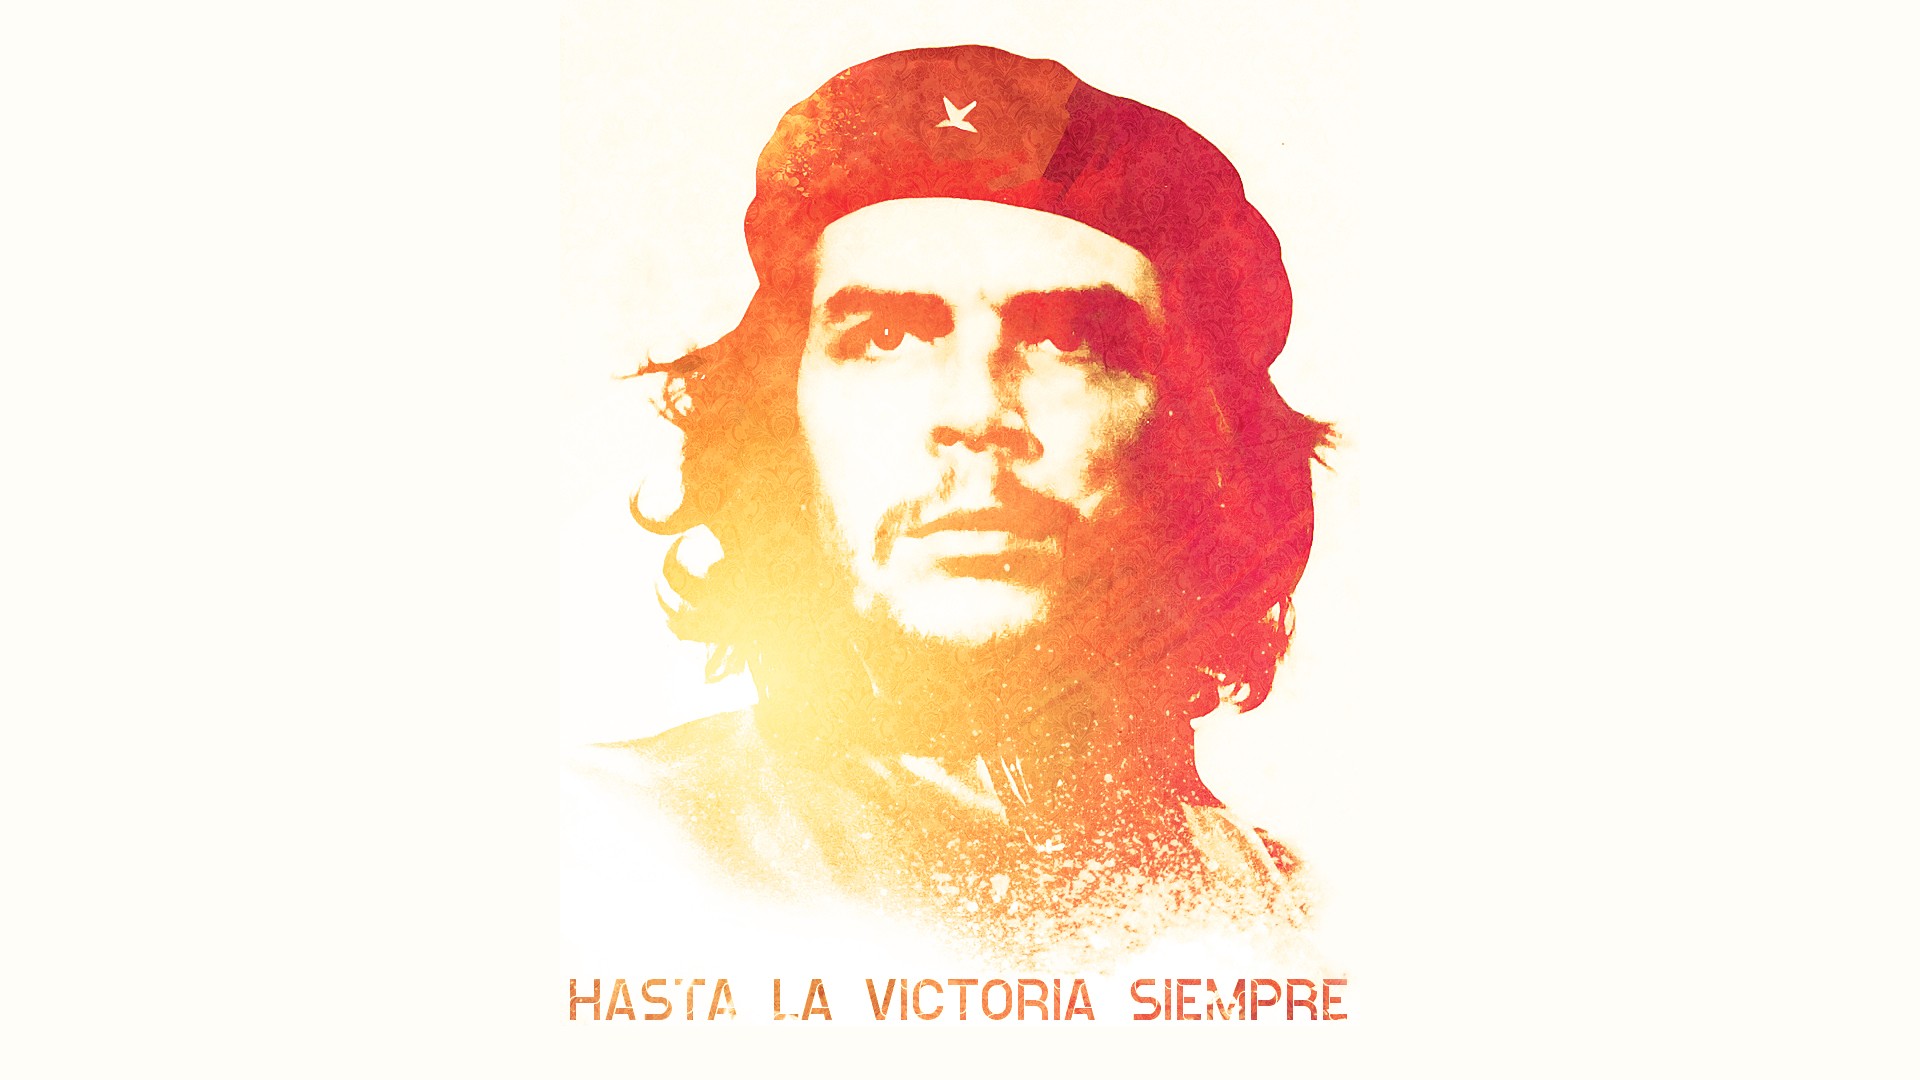 General 1920x1080 Che Guevara men celebrity simple background artwork portrait political figure